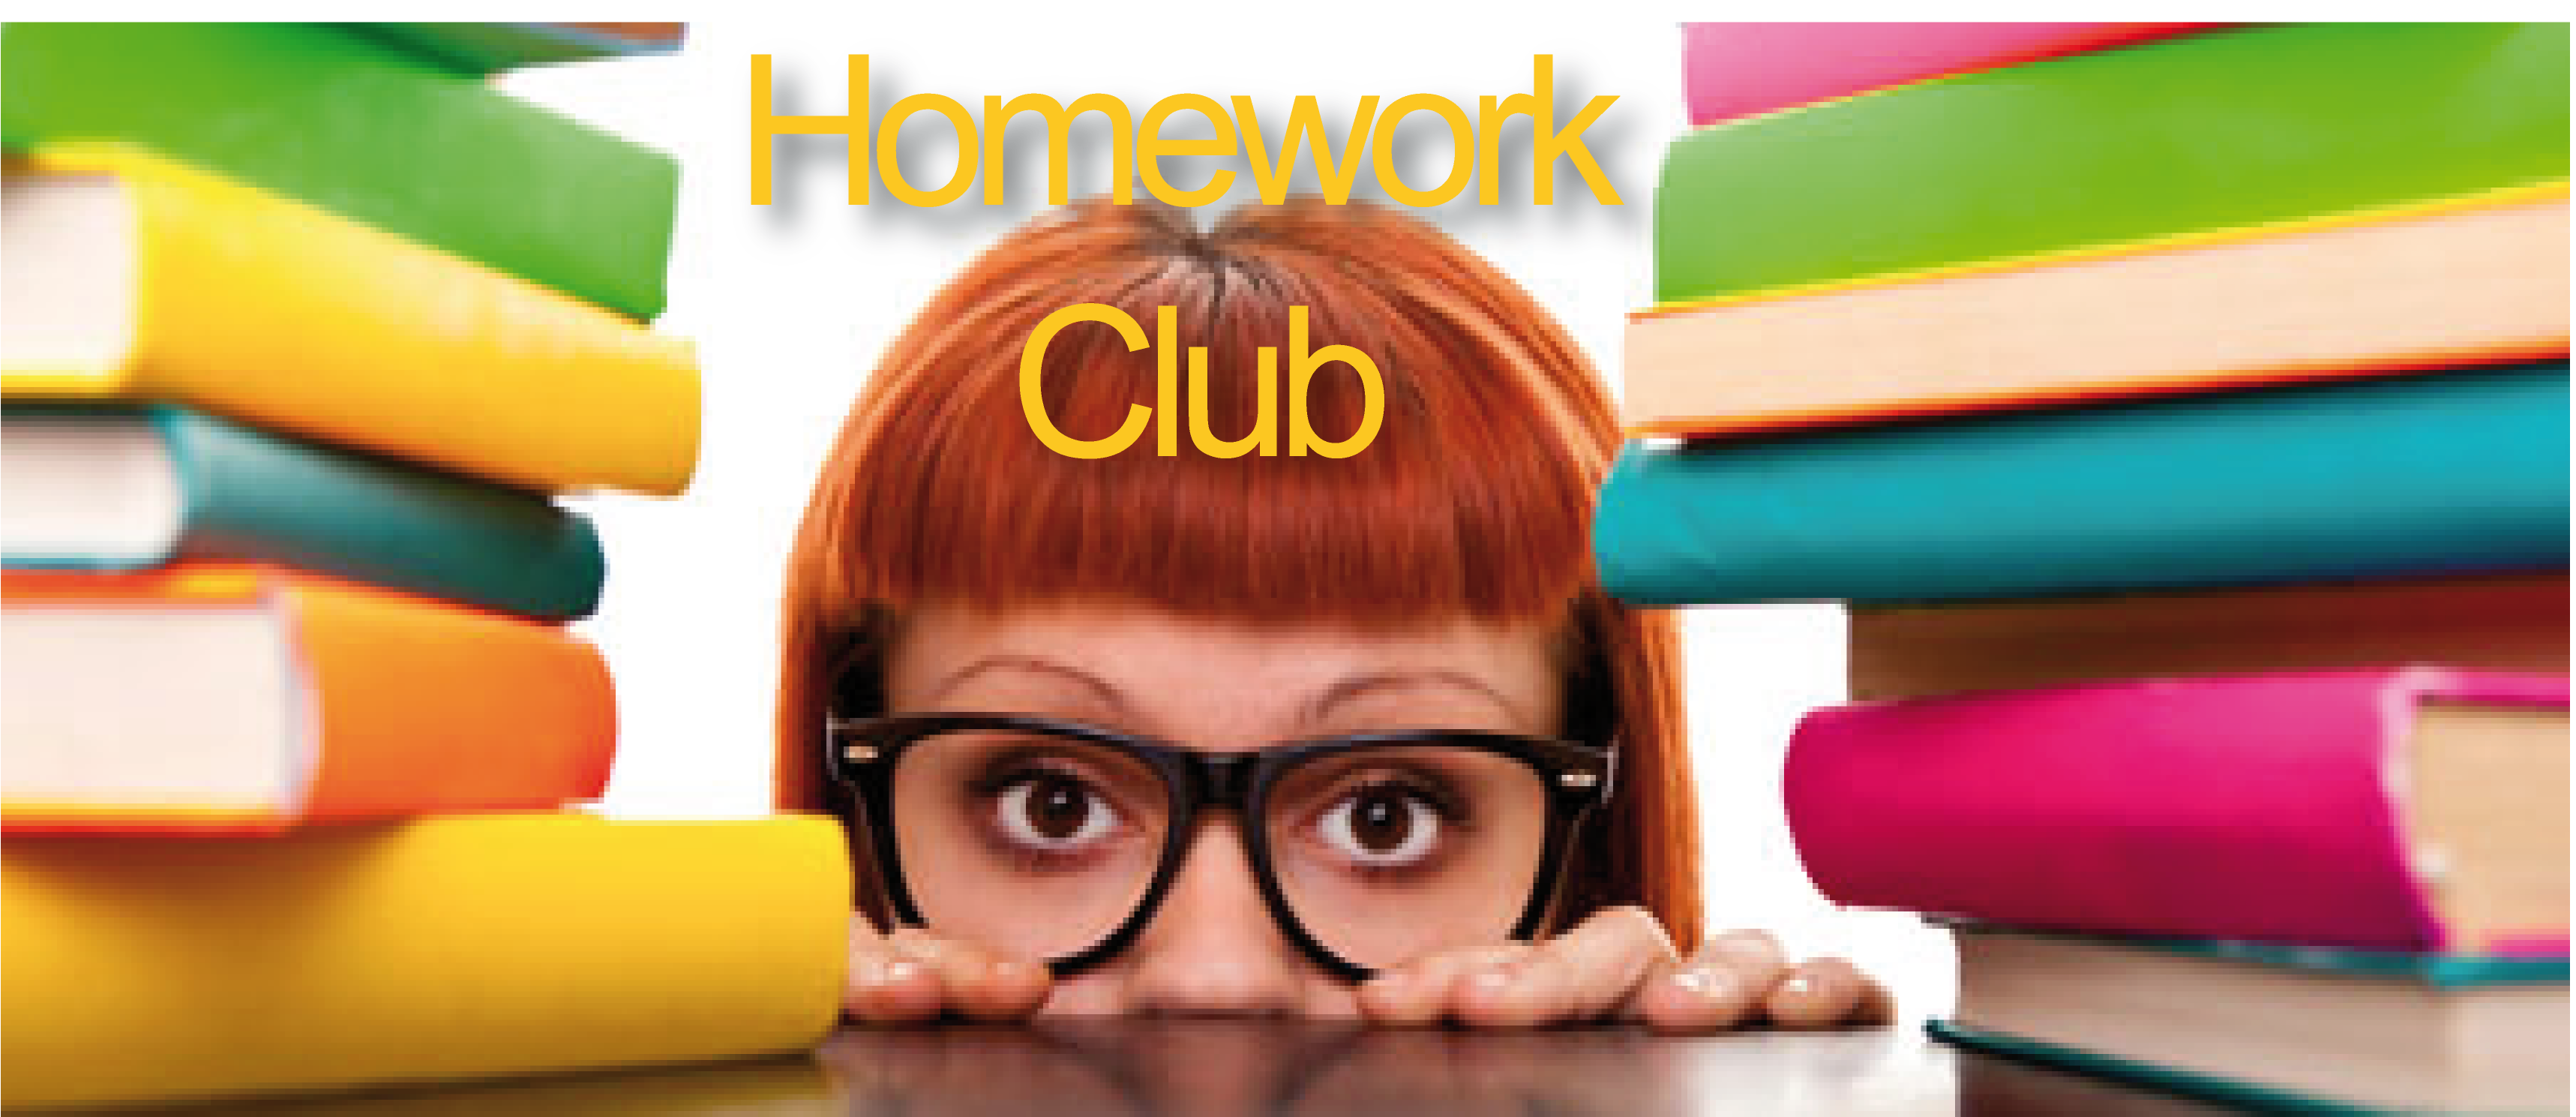 homework club in school